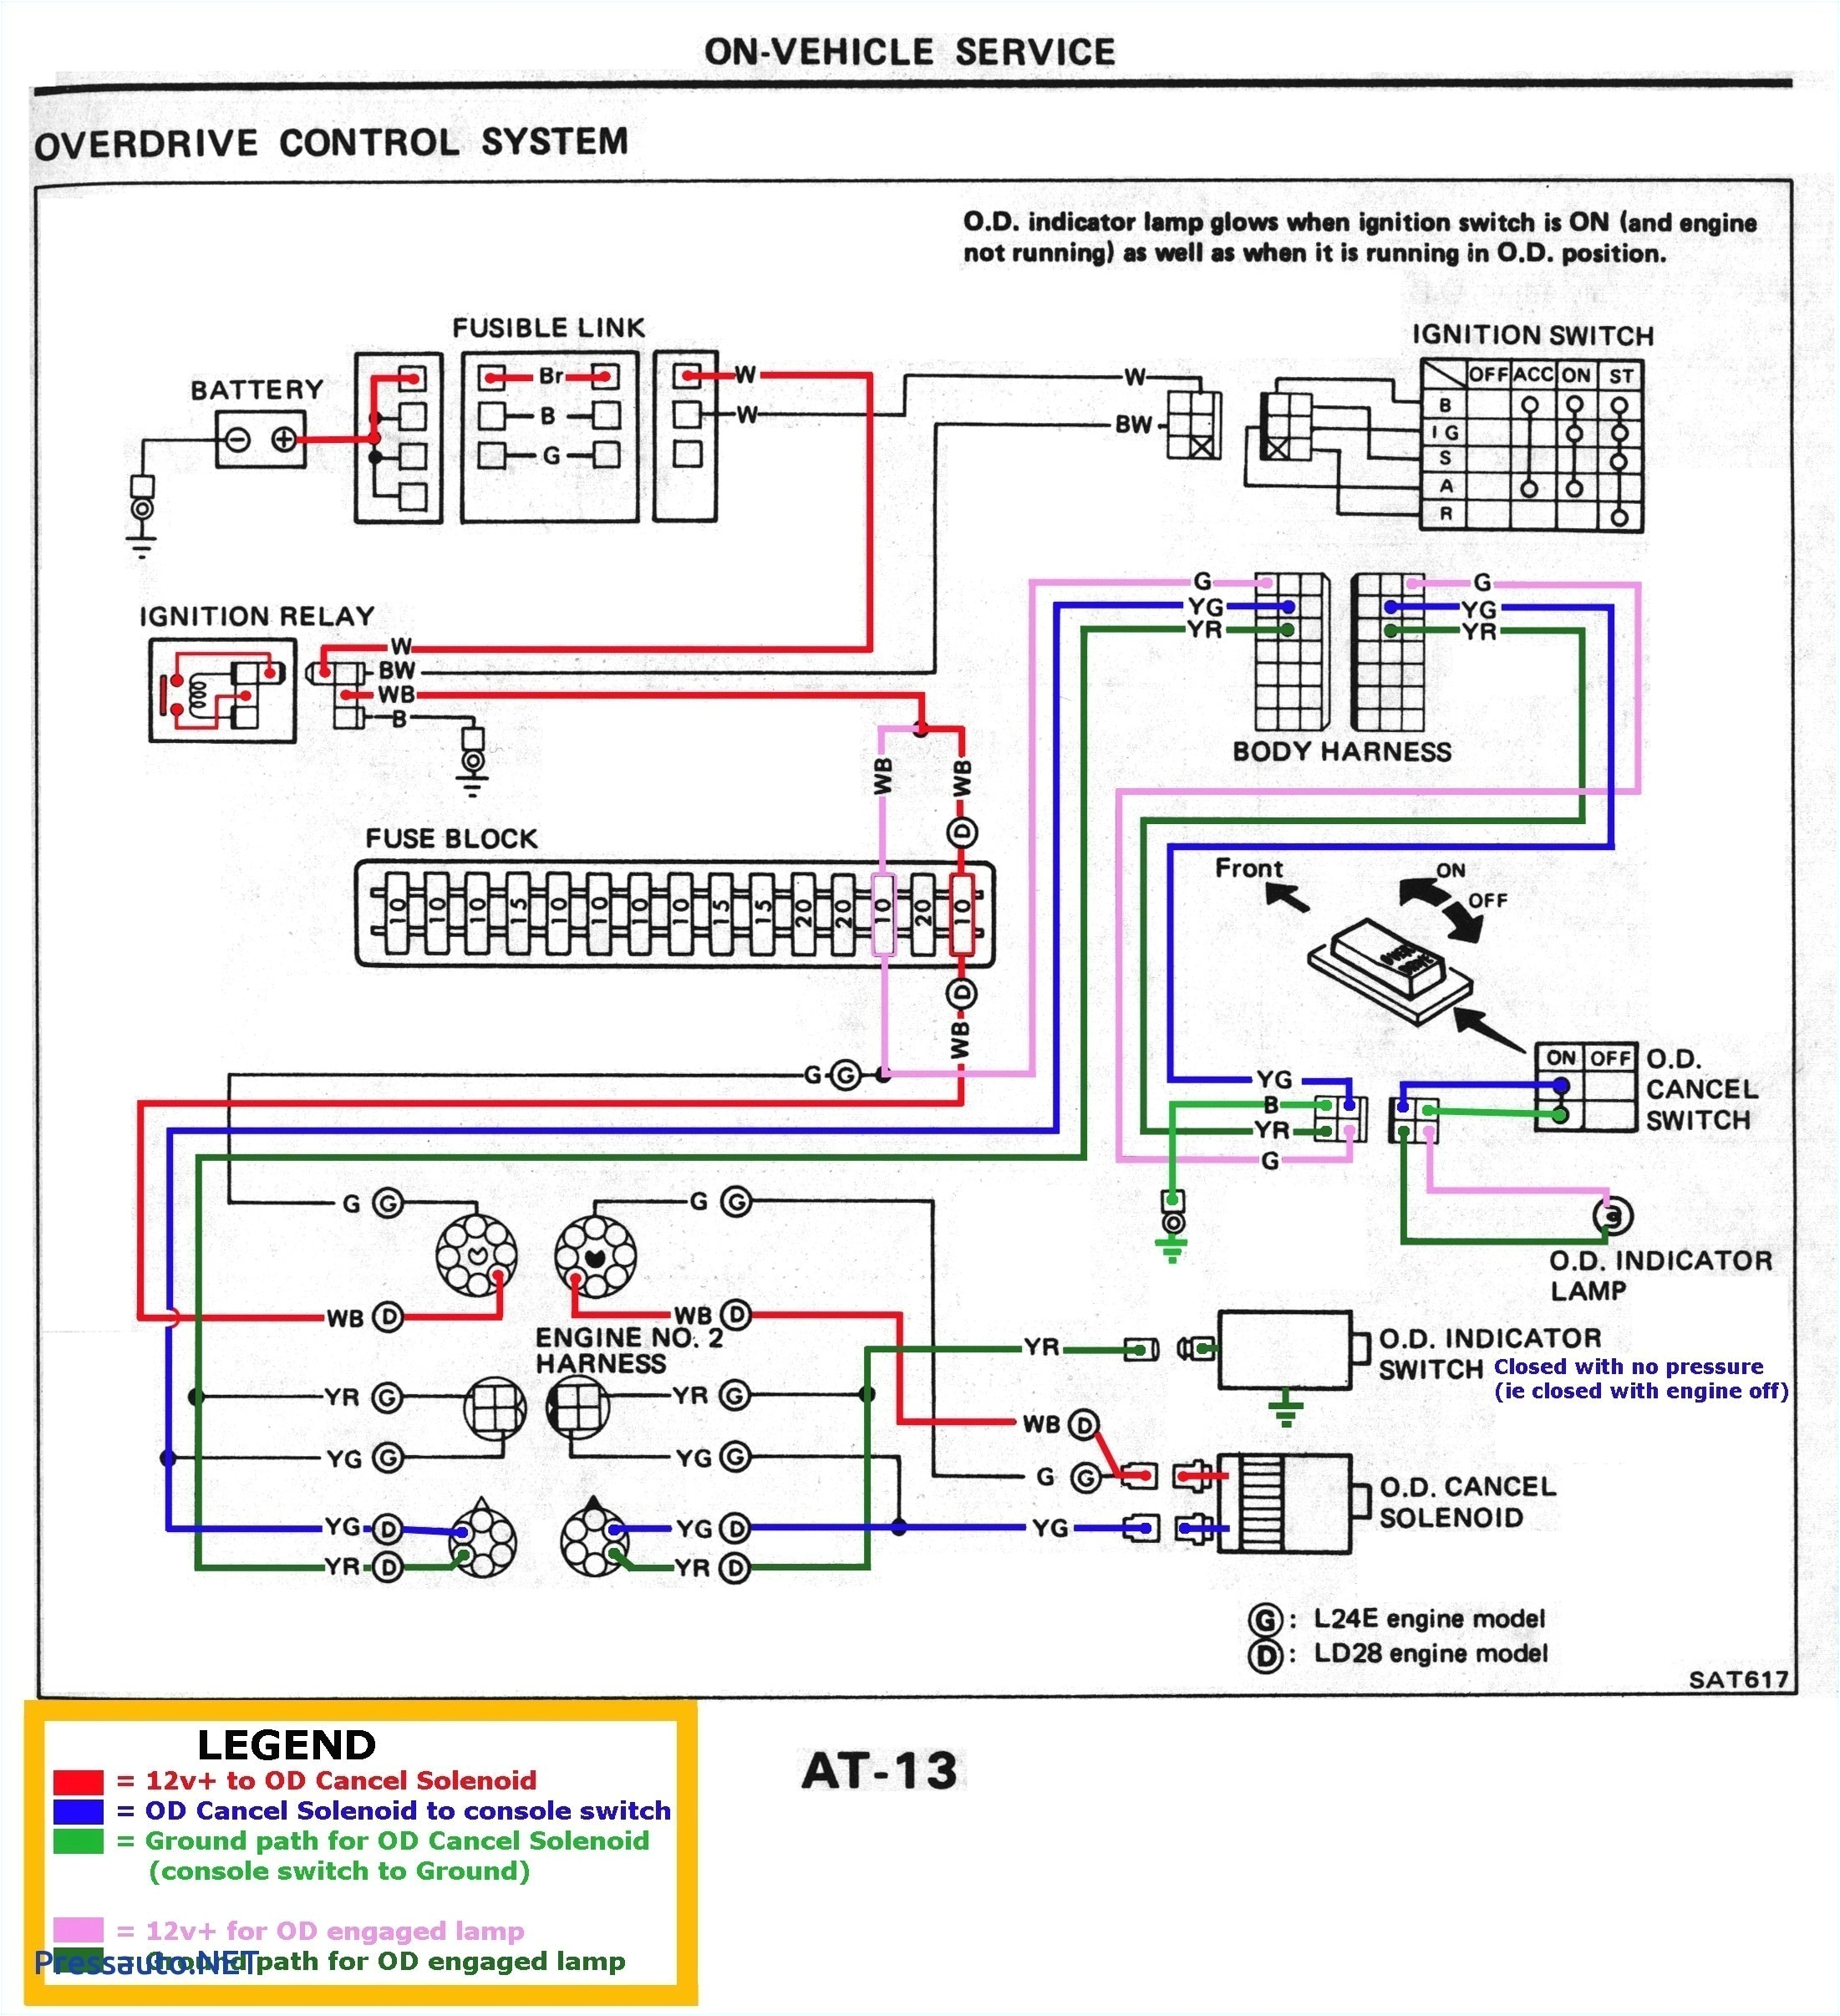 bmw wiring diagram